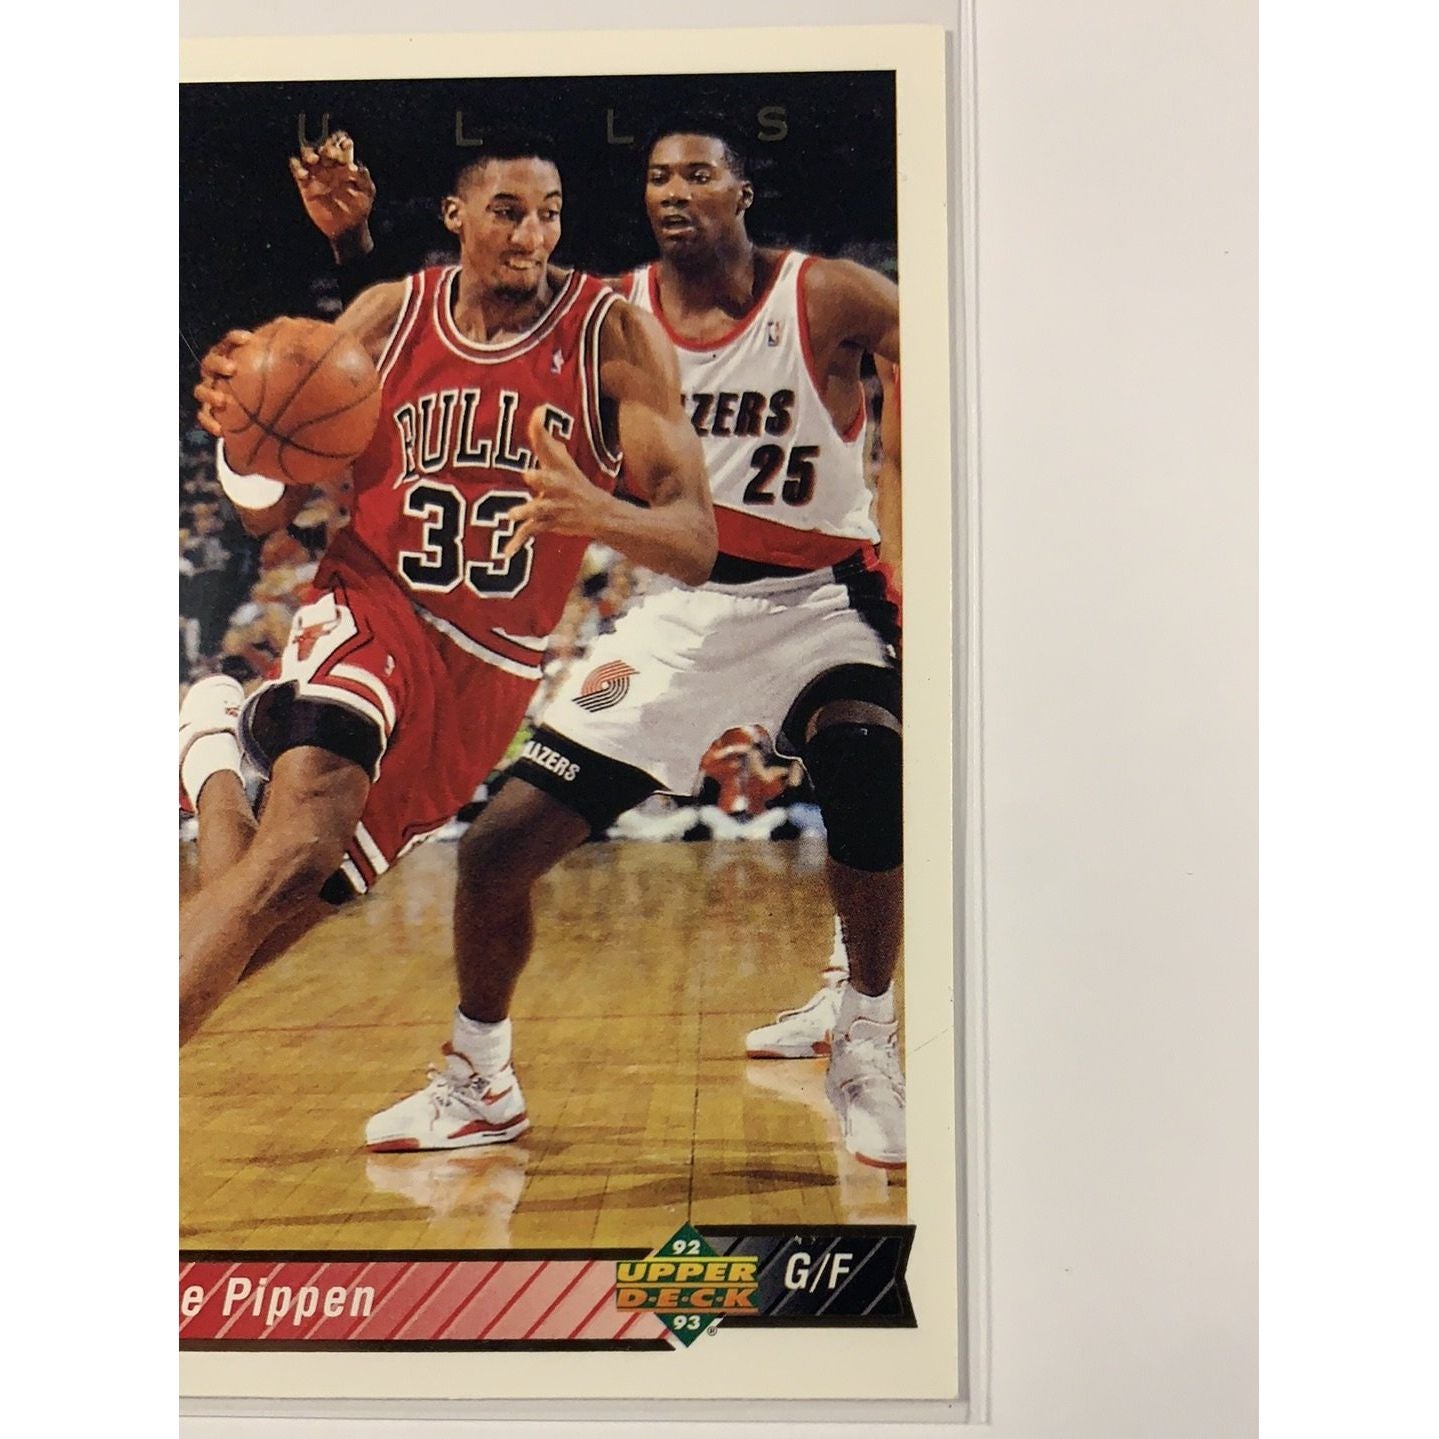  1992-93 Upper Deck Scottie Pippen Base #133  Local Legends Cards & Collectibles